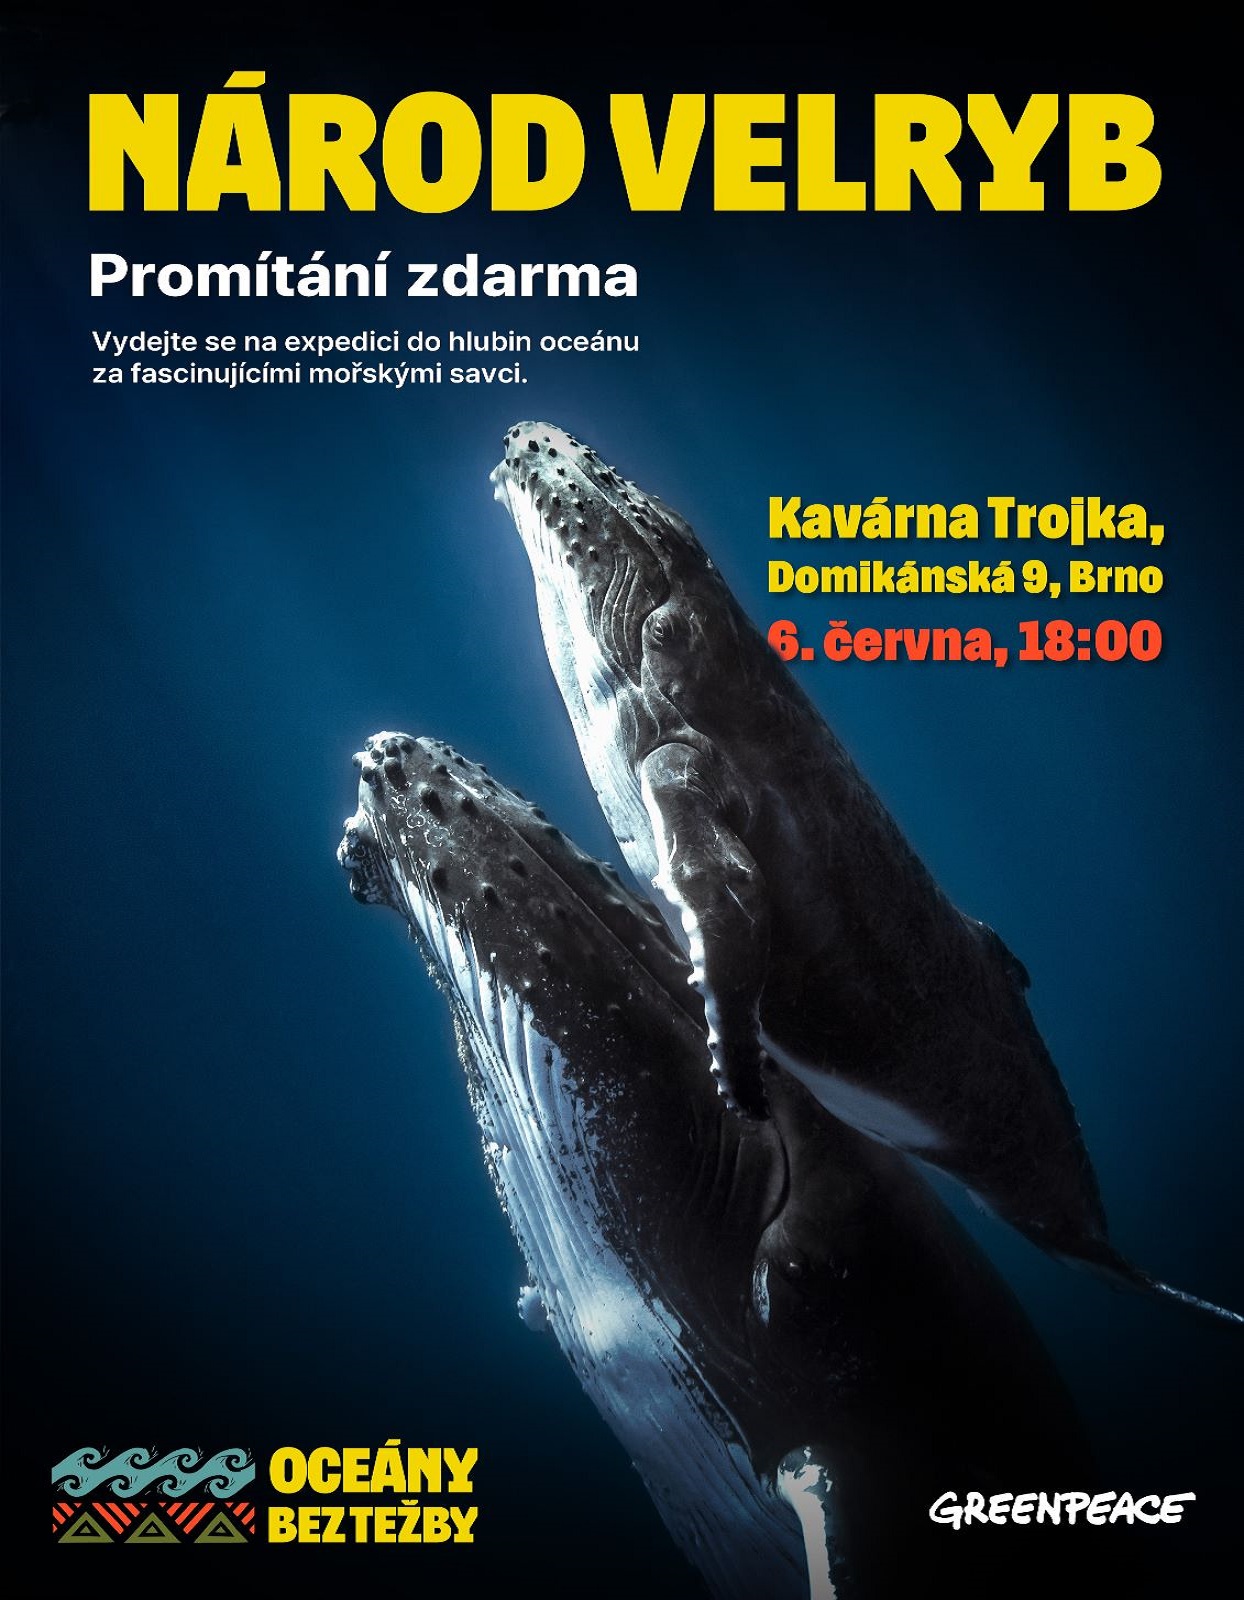 Národ velryb - filmový večer s Greenpeace